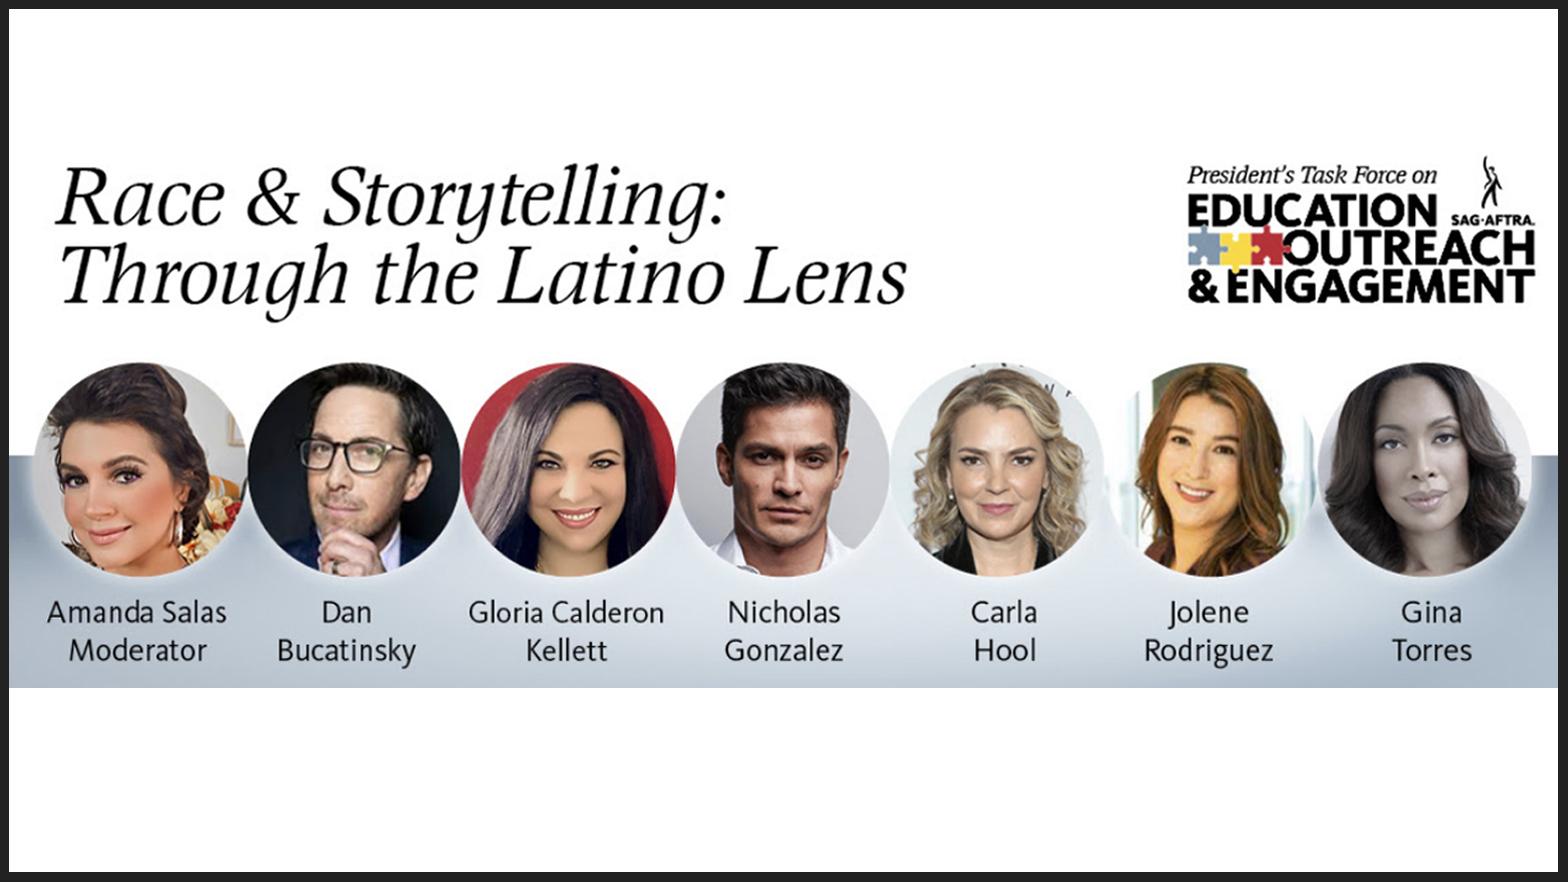 "Race & Storytelling: Through the Latino Lens" en la parte superior en negro. LR disparos a la cabeza de Salas, Bucatinsky, Calderon Kellet, Gonzalez, Hool, Rodriguez, Torres